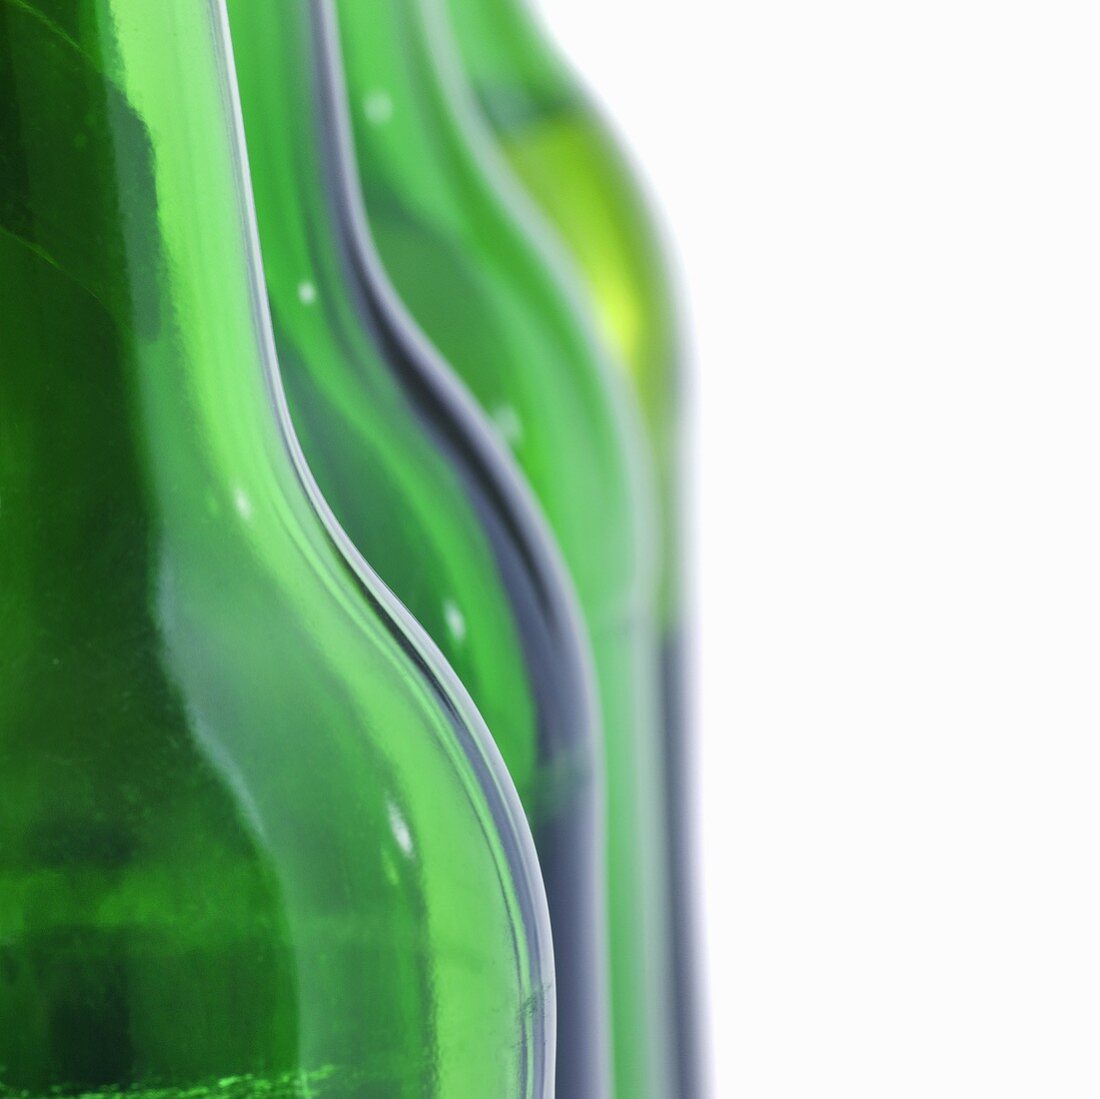 Green beer bottles in a row (detail)